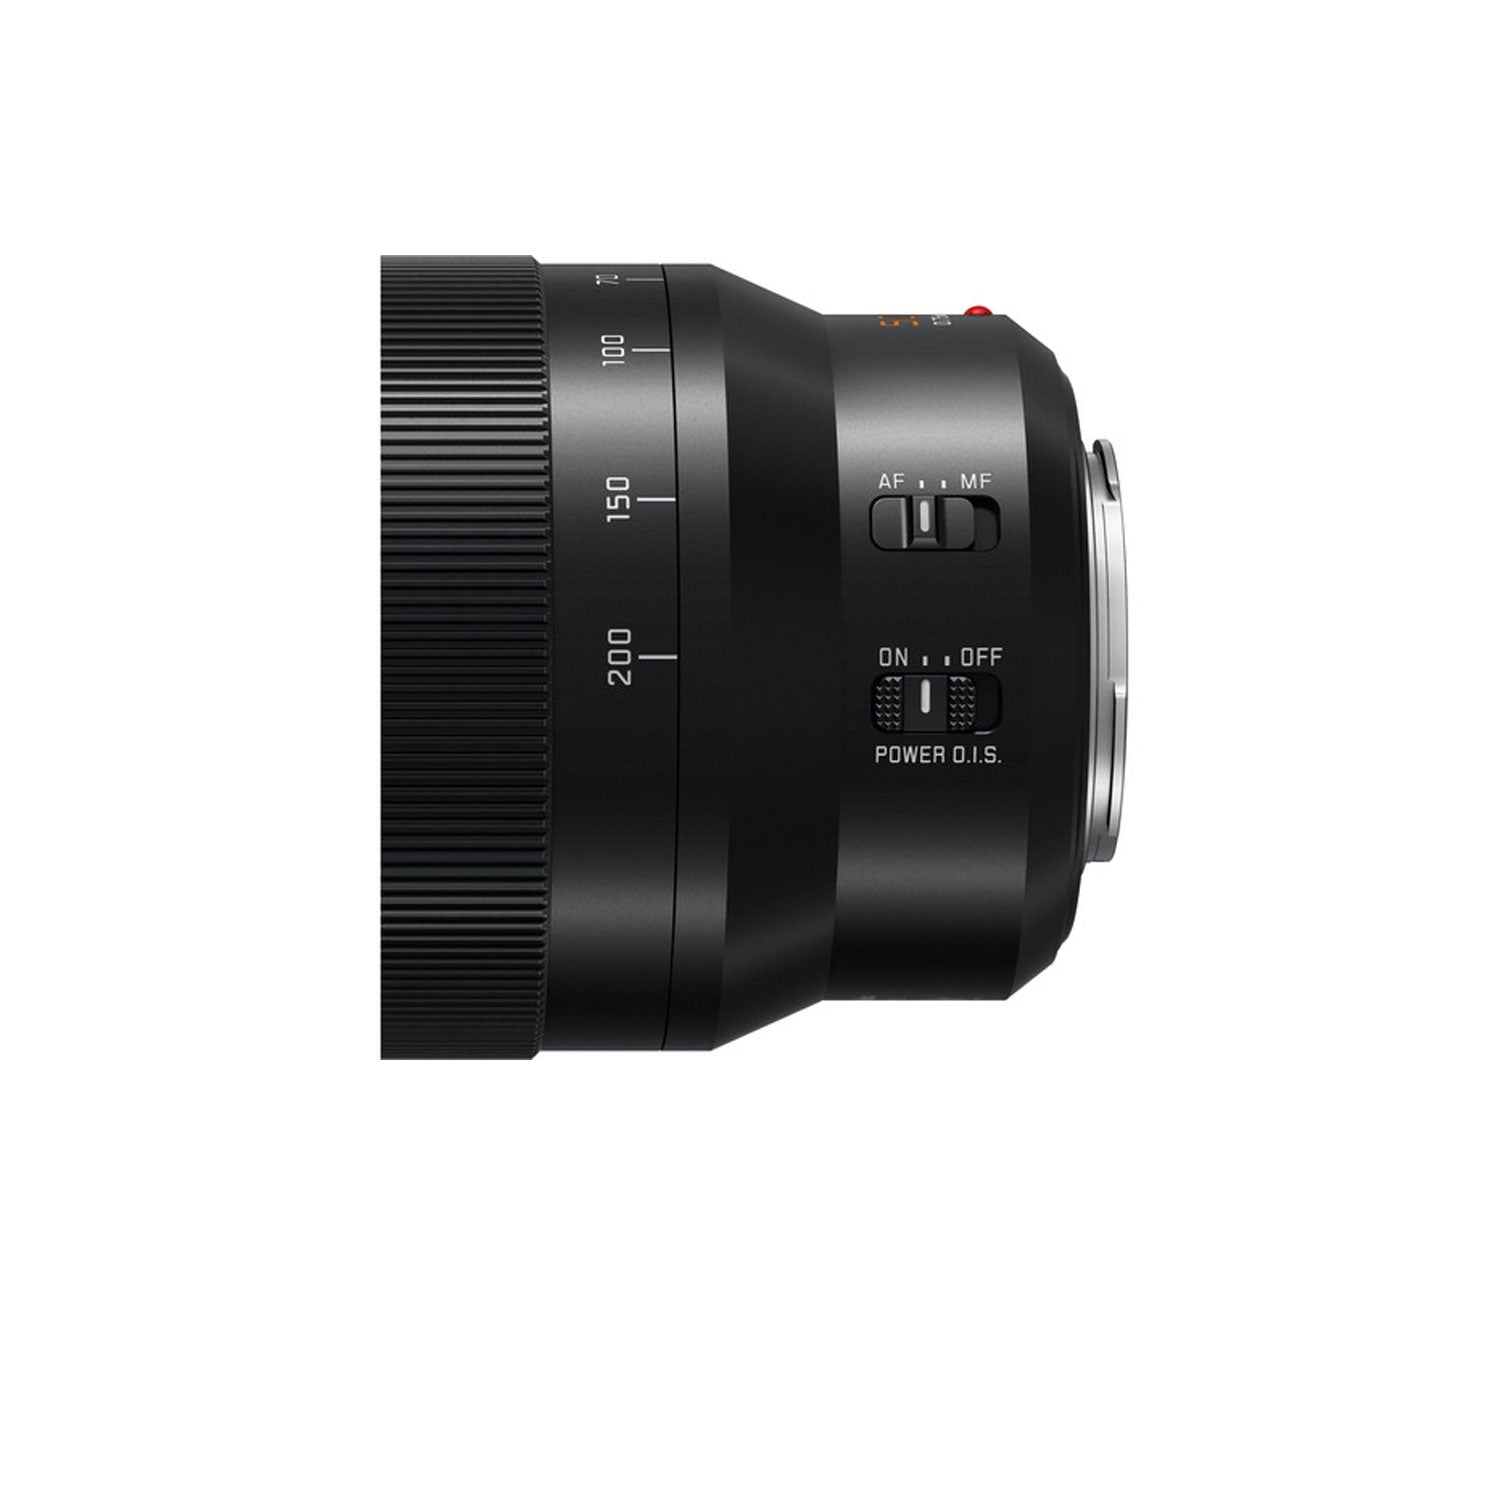 Panasonic Leica DG Vario-Elmarit 50-200mm f/2.8-4 ASPH. POWER O.I.S. Lens with Memory Card (International Model) -